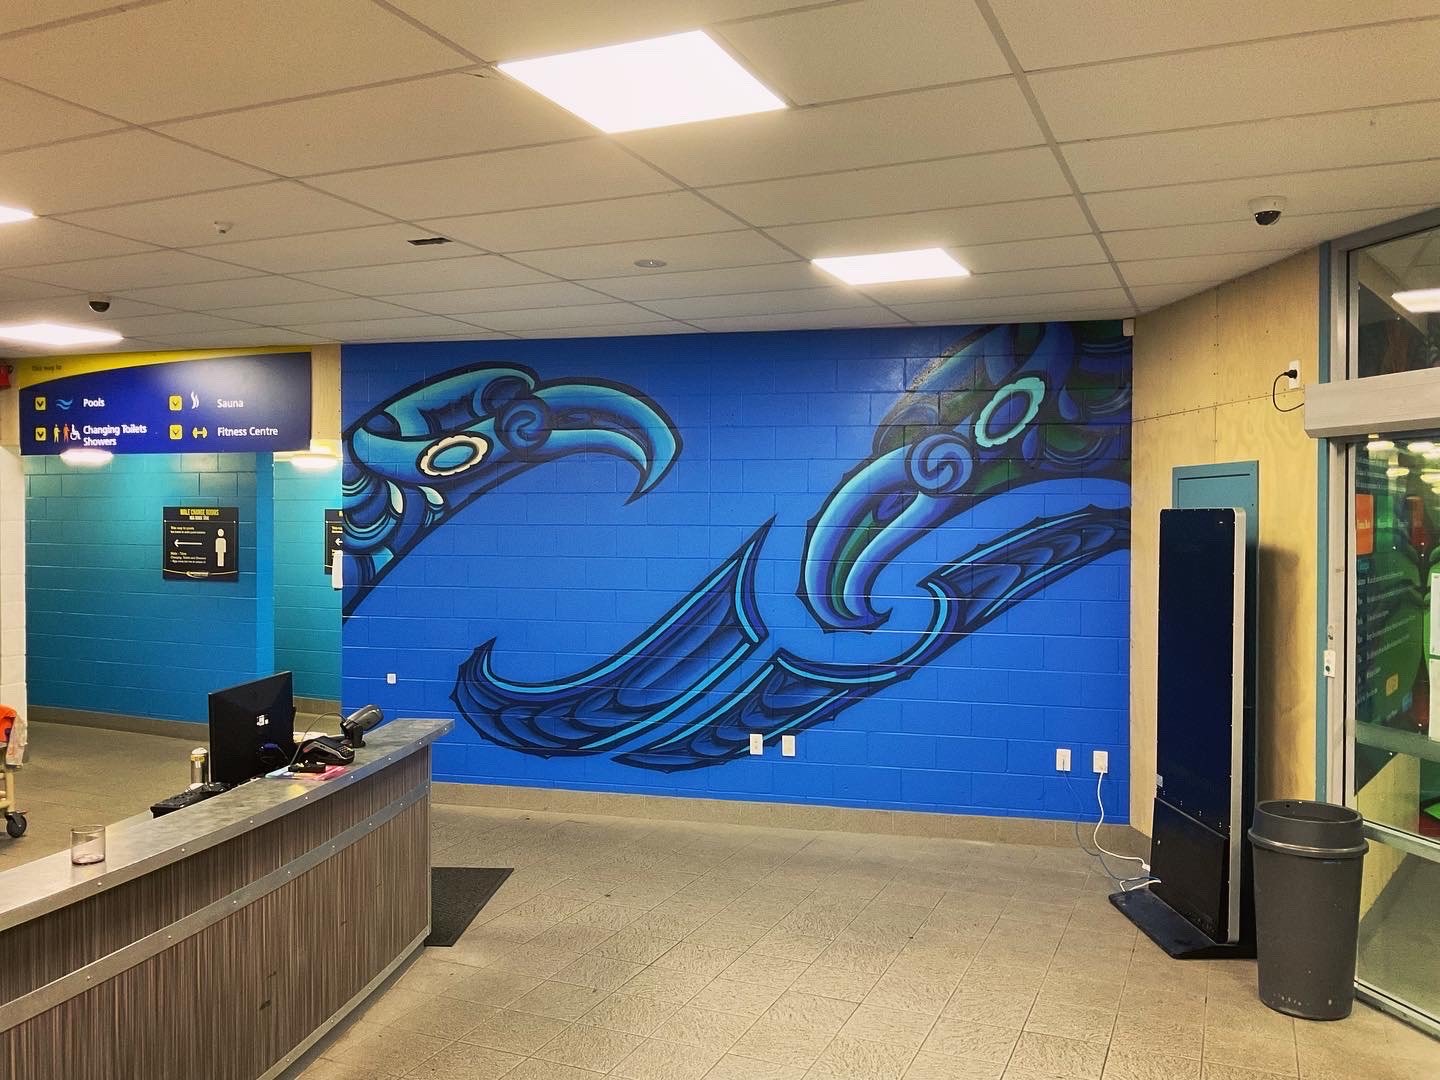   Wai Ora- Whangārei Aquatic Centre&nbsp;Ko Waitī rāua ko Waitā. This mural is inspired from our pūrākau regarding matariki. I saw it as an awesome opportunity to weave our traditional knowledge into public spaces.&nbsp;     